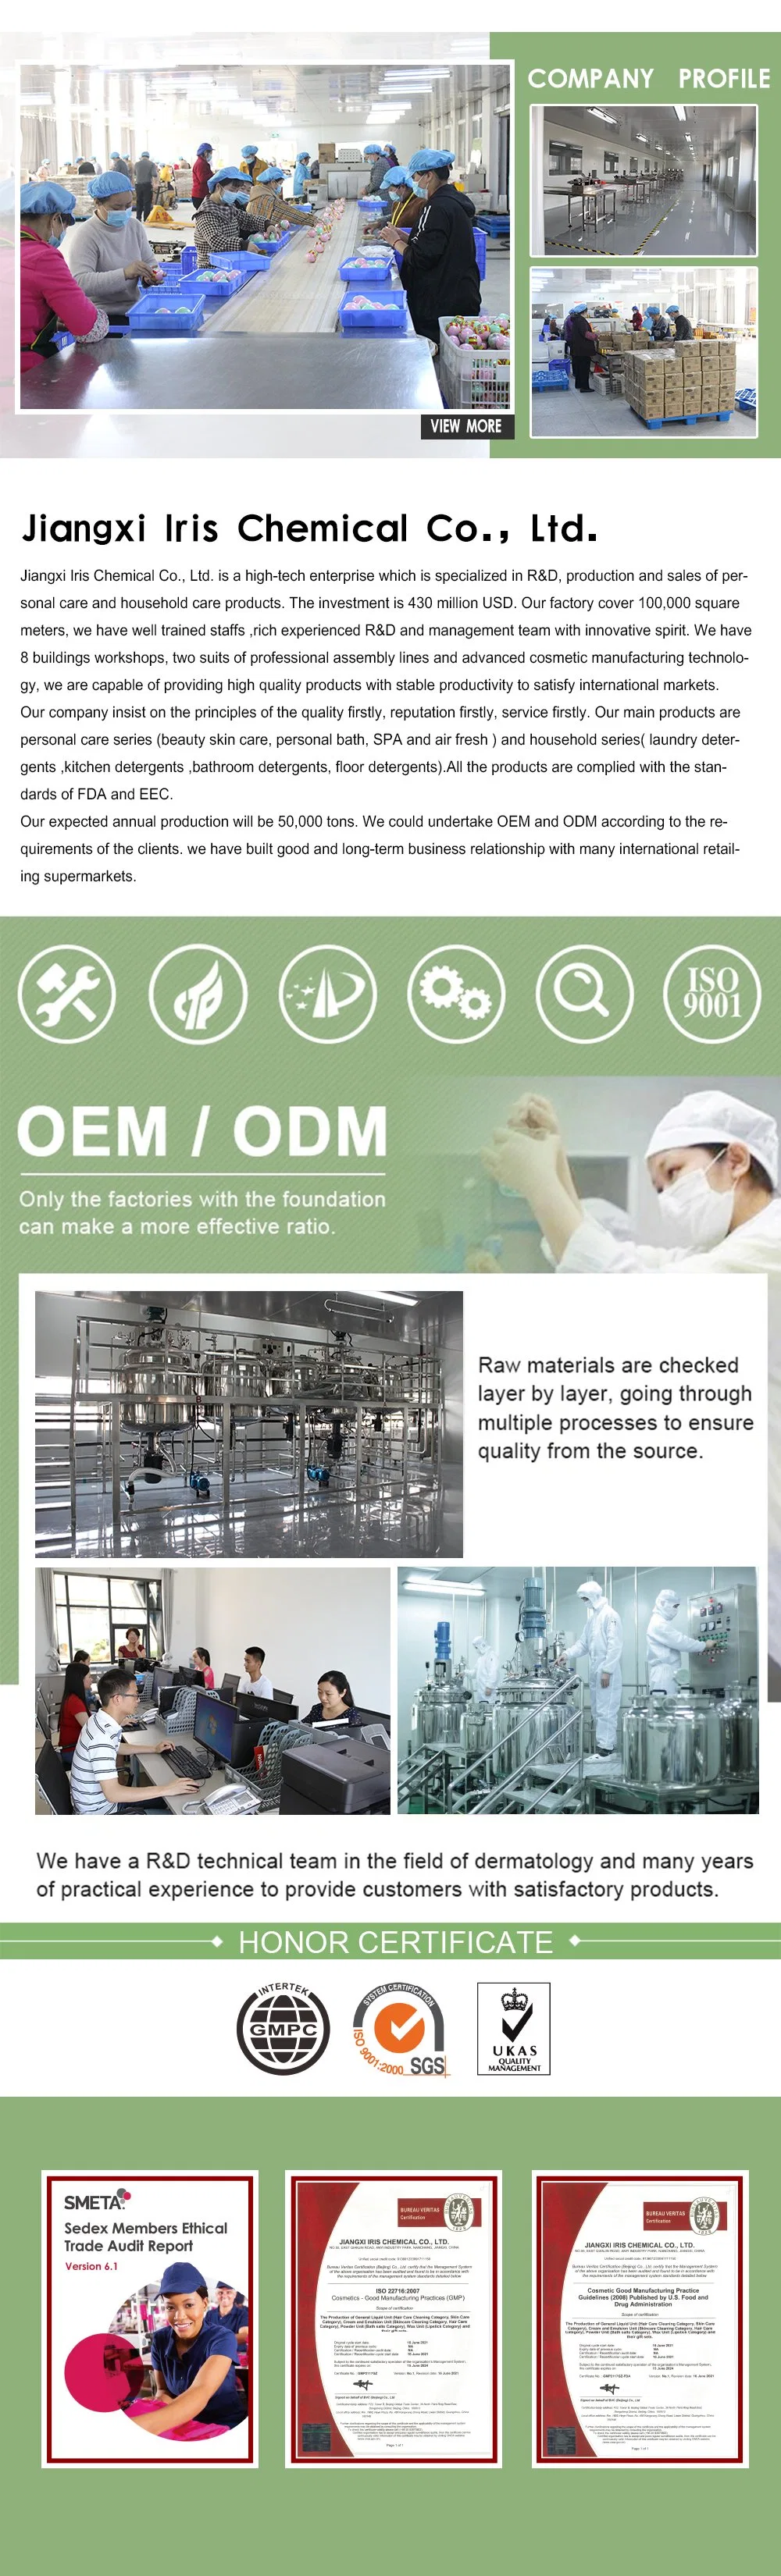 OEM & ODM Supplier Wholesale Vitamin E Bath Kit Set Hand Cream